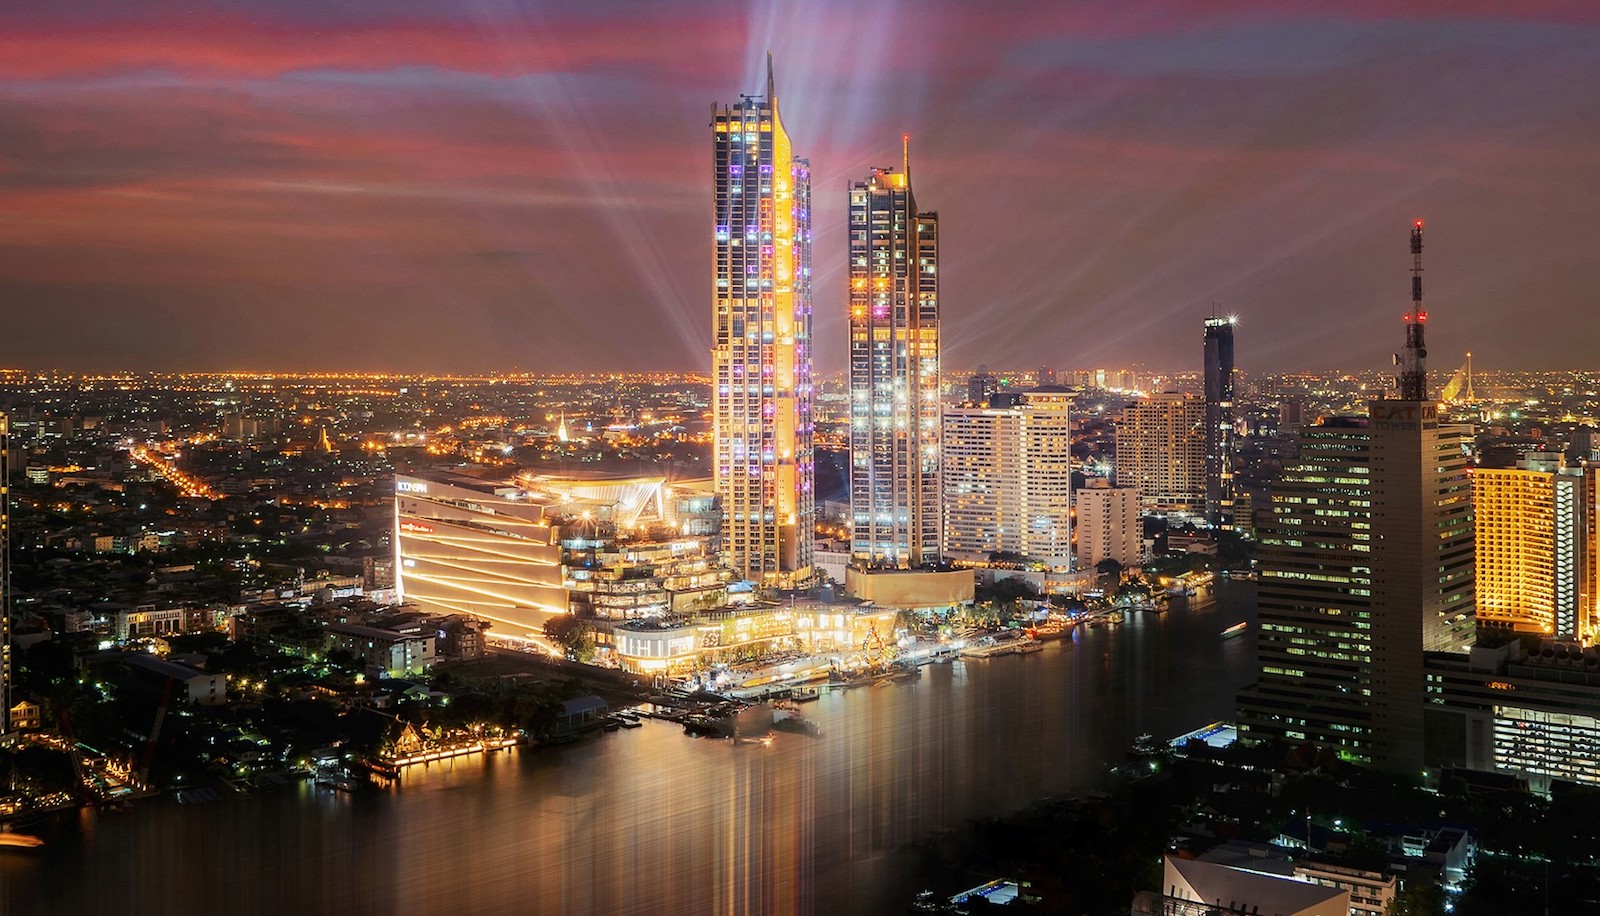 IconSiam - Top 5 best Bangkok shopping malls